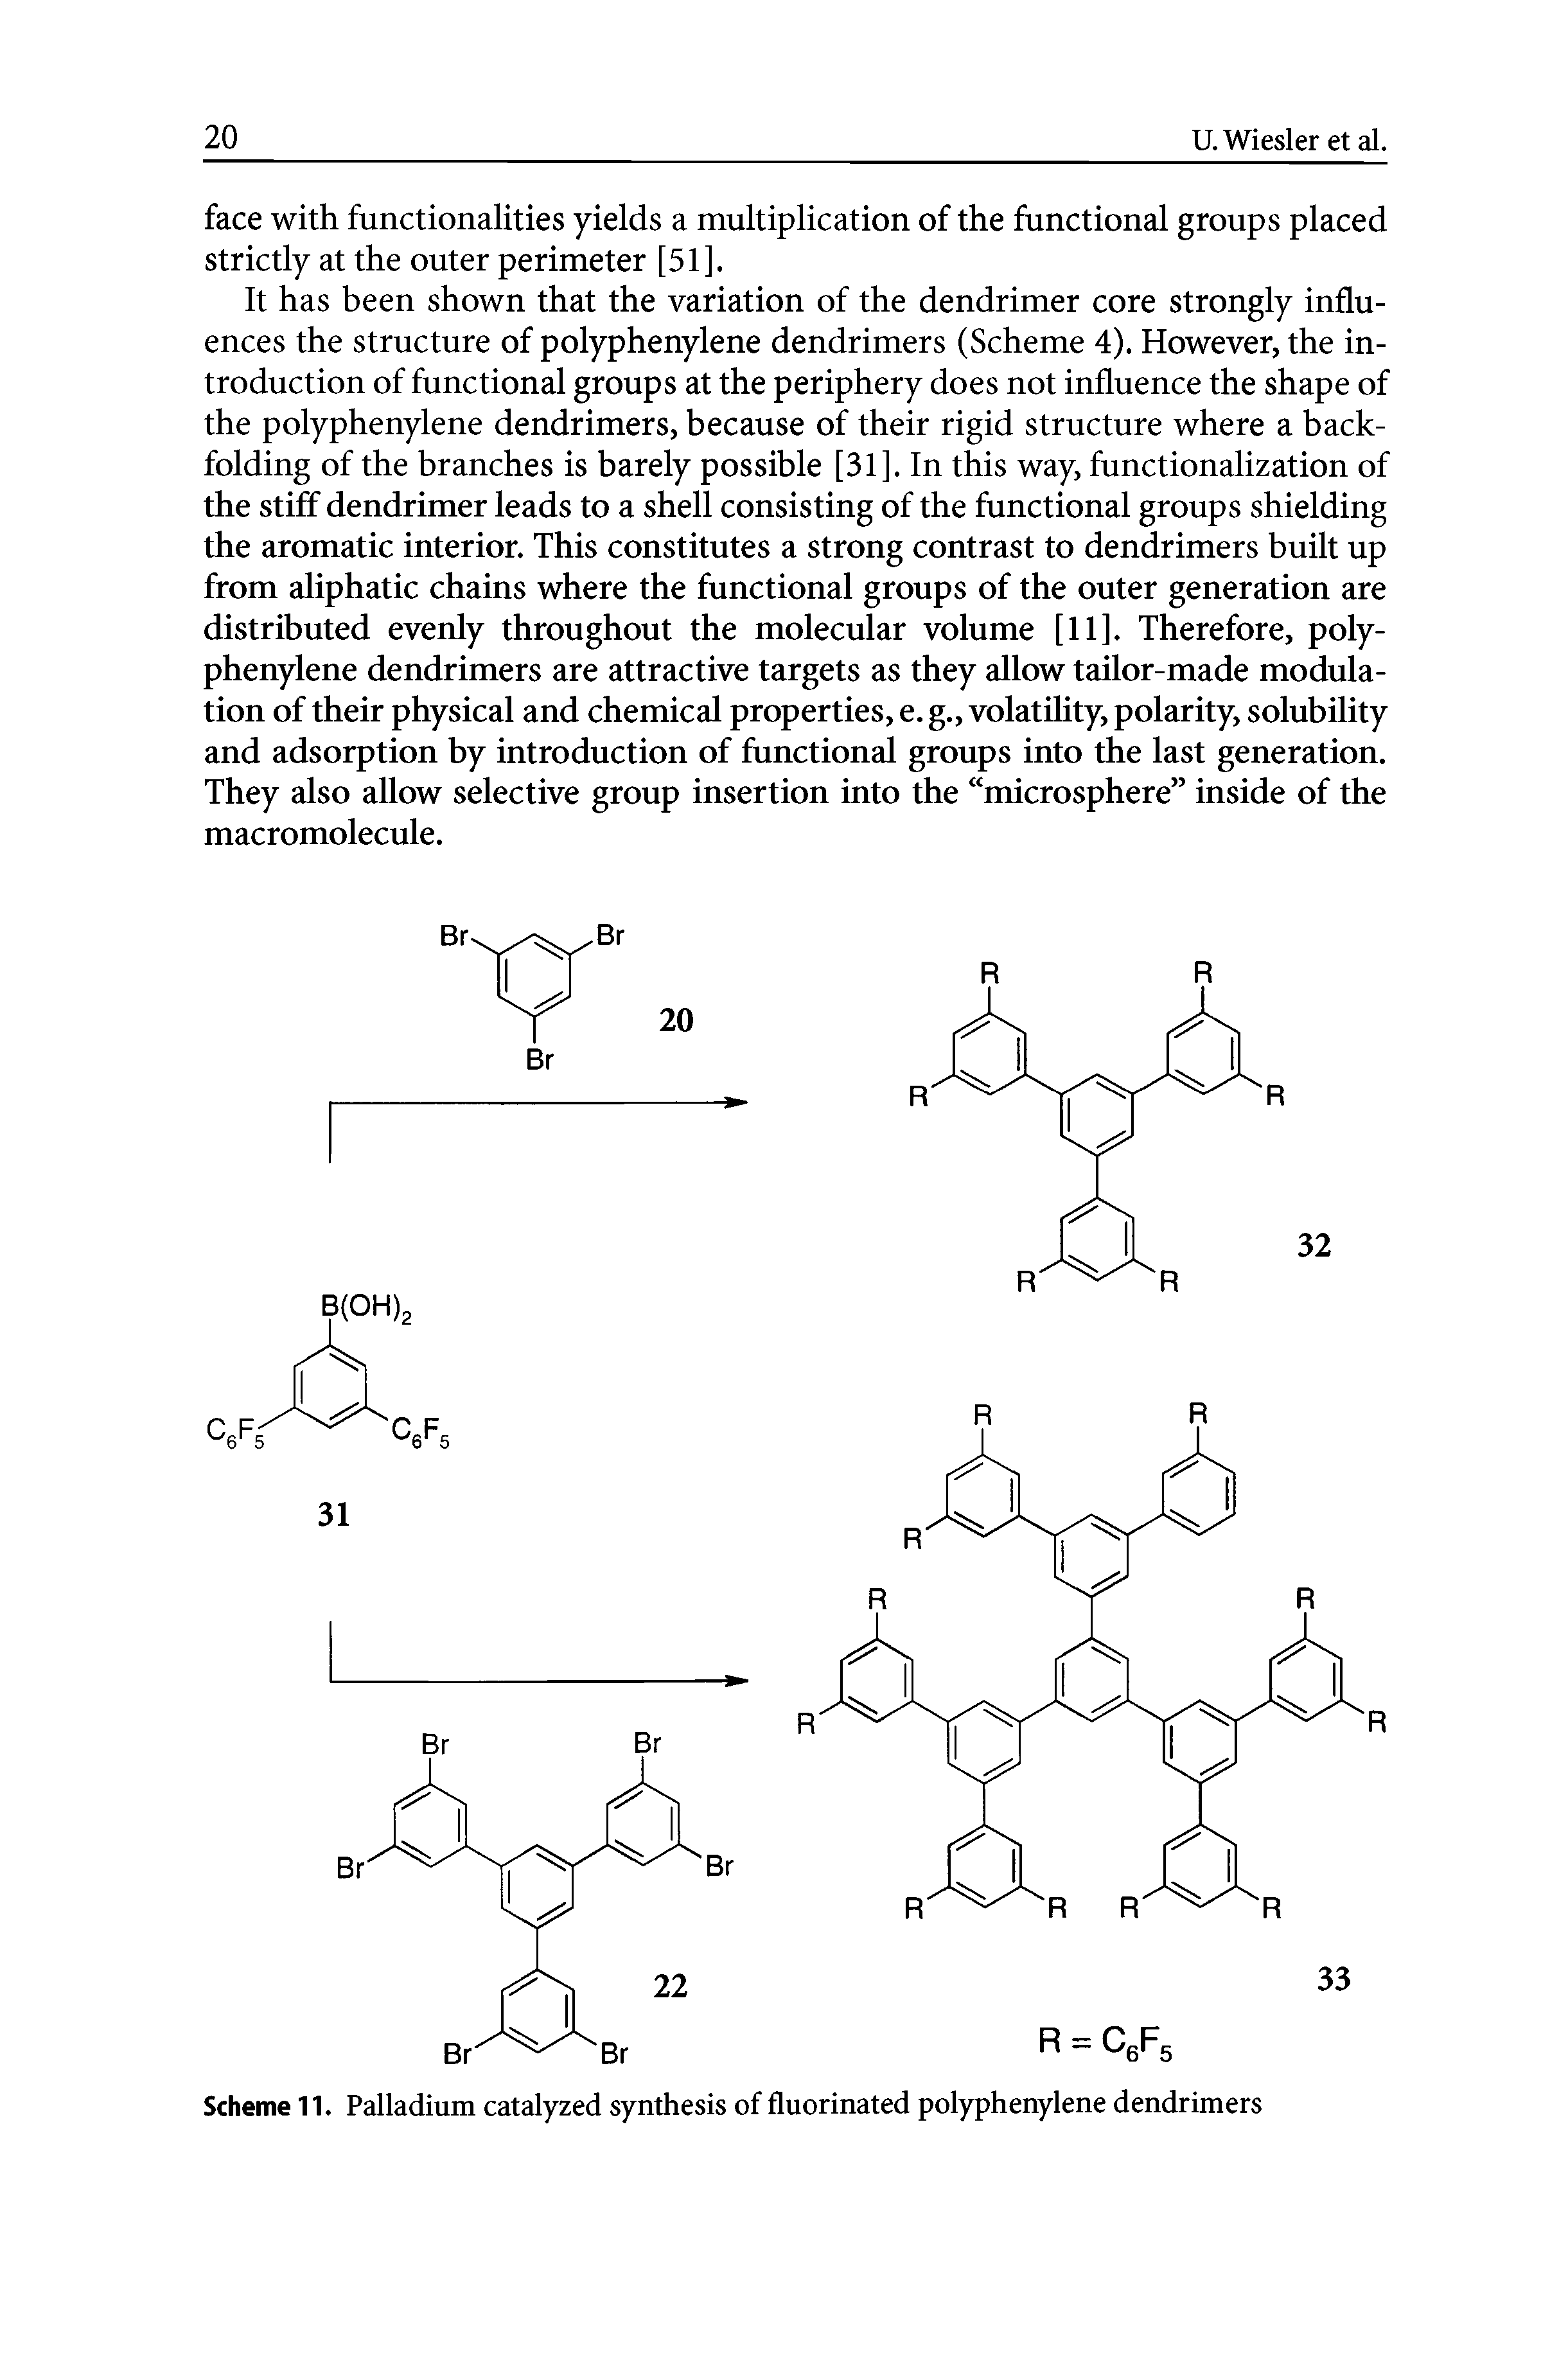 Scheme 11. Palladium catalyzed synthesis of fluorinated polyphenylene dendrimers...